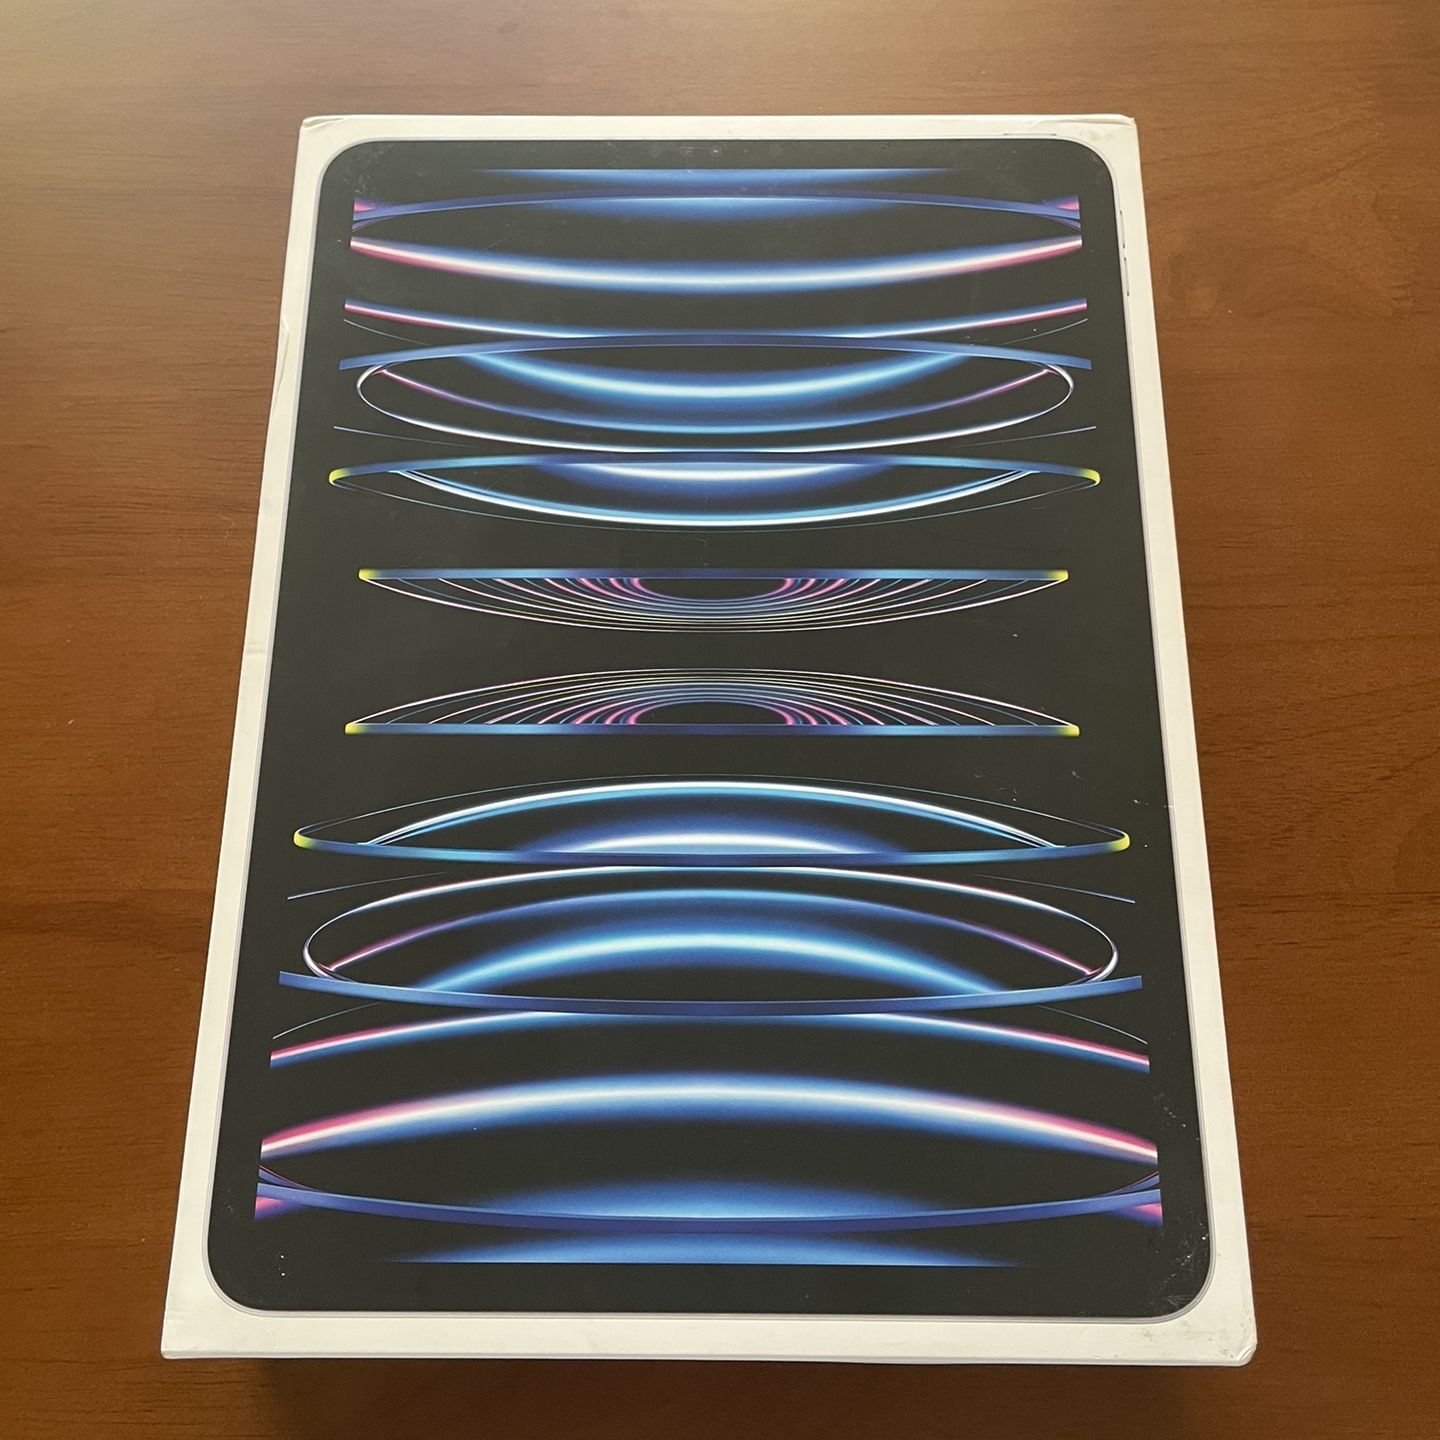 iPad Pro 11 Inch (4th Generation)